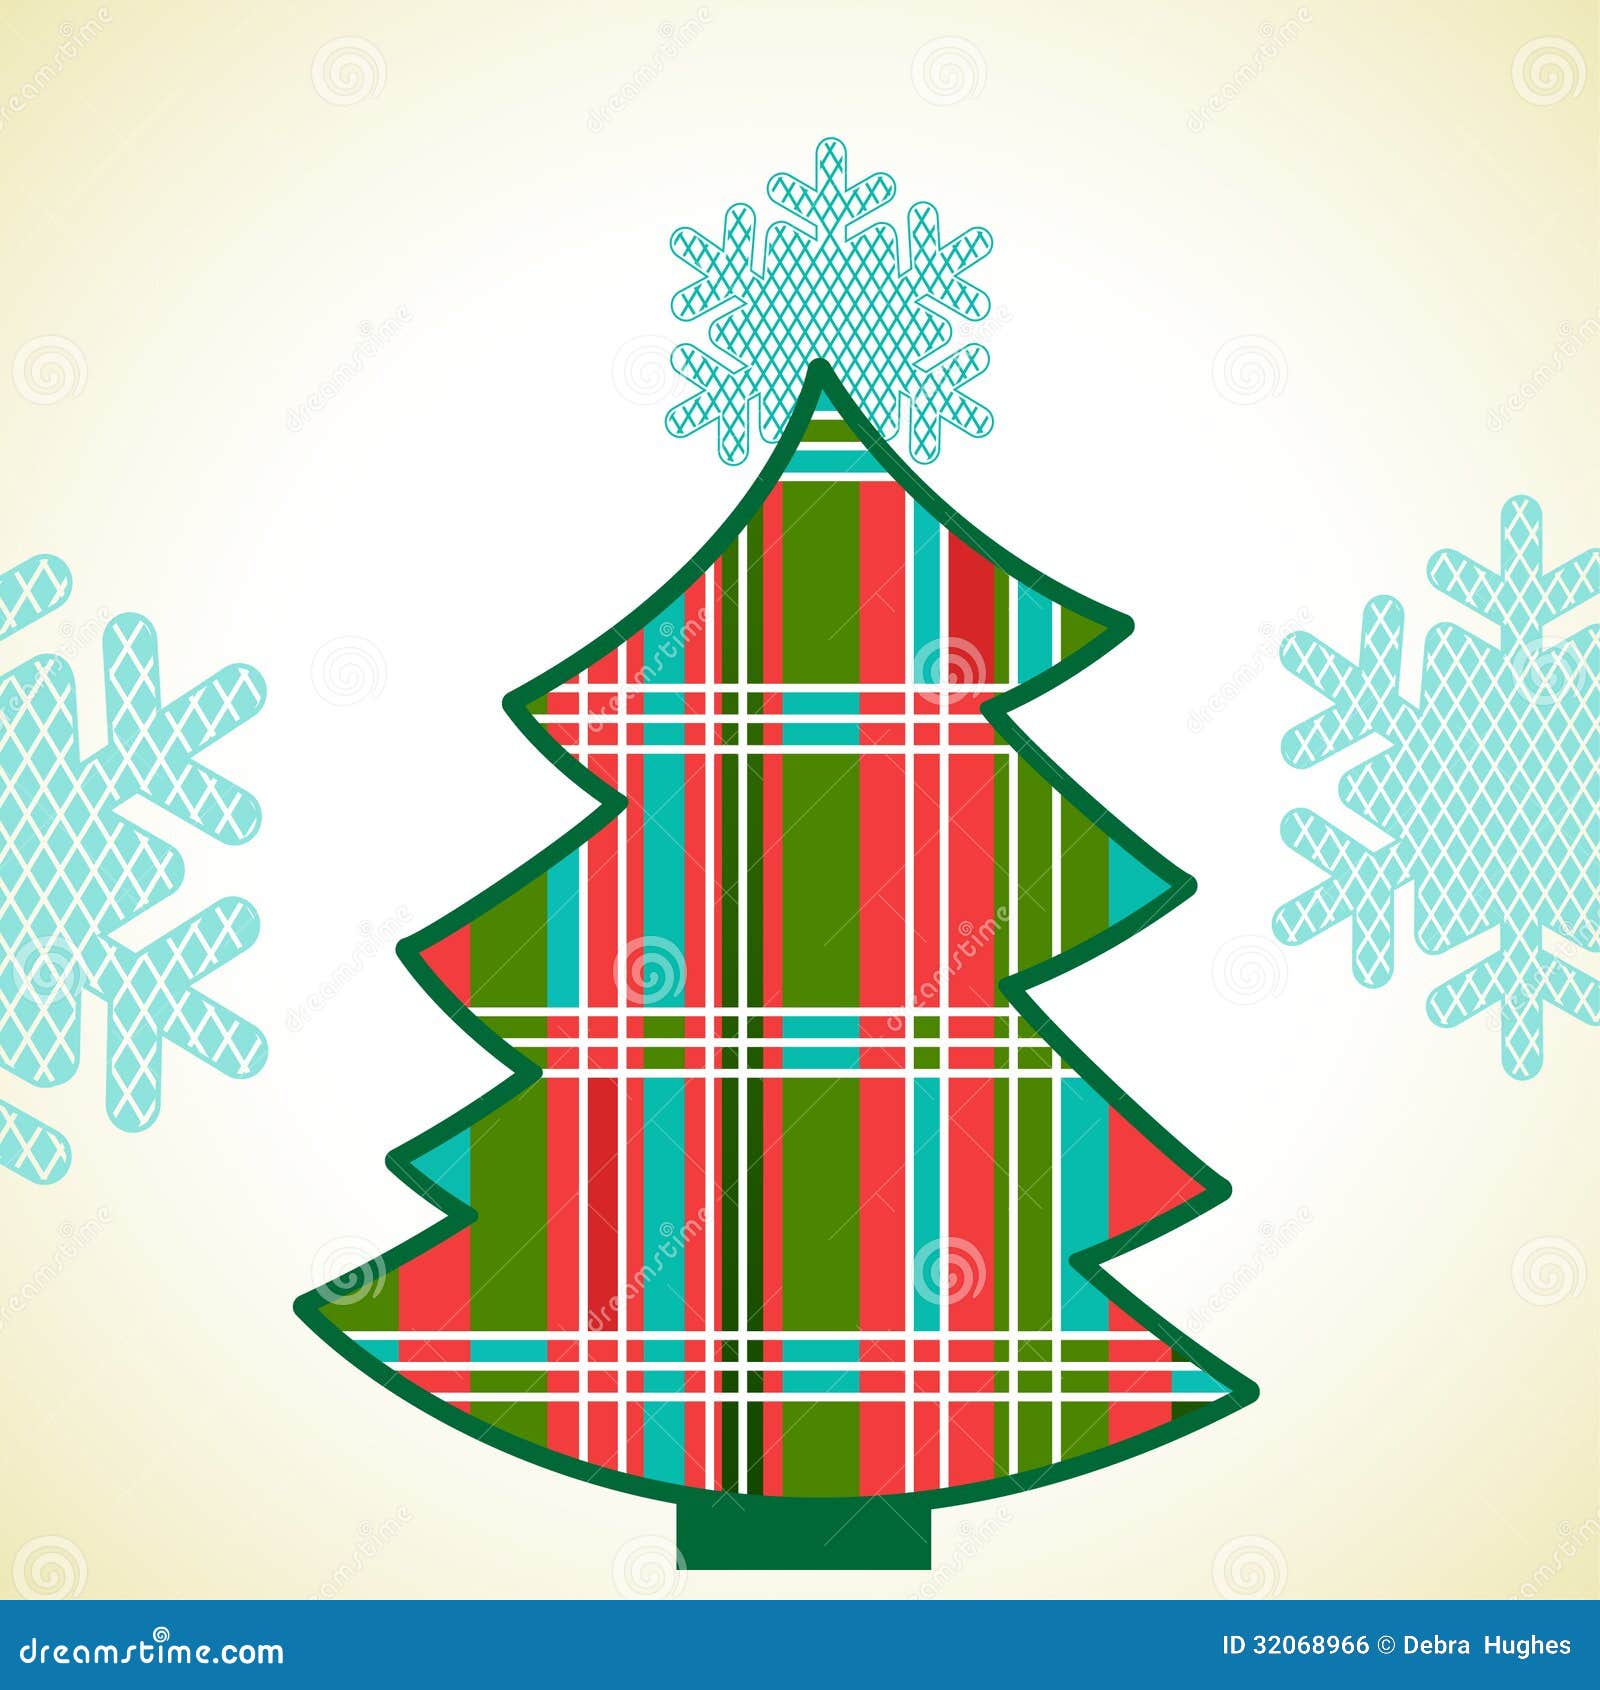 Plaid Christmas Tree stock vector. Illustration of background - 32068966